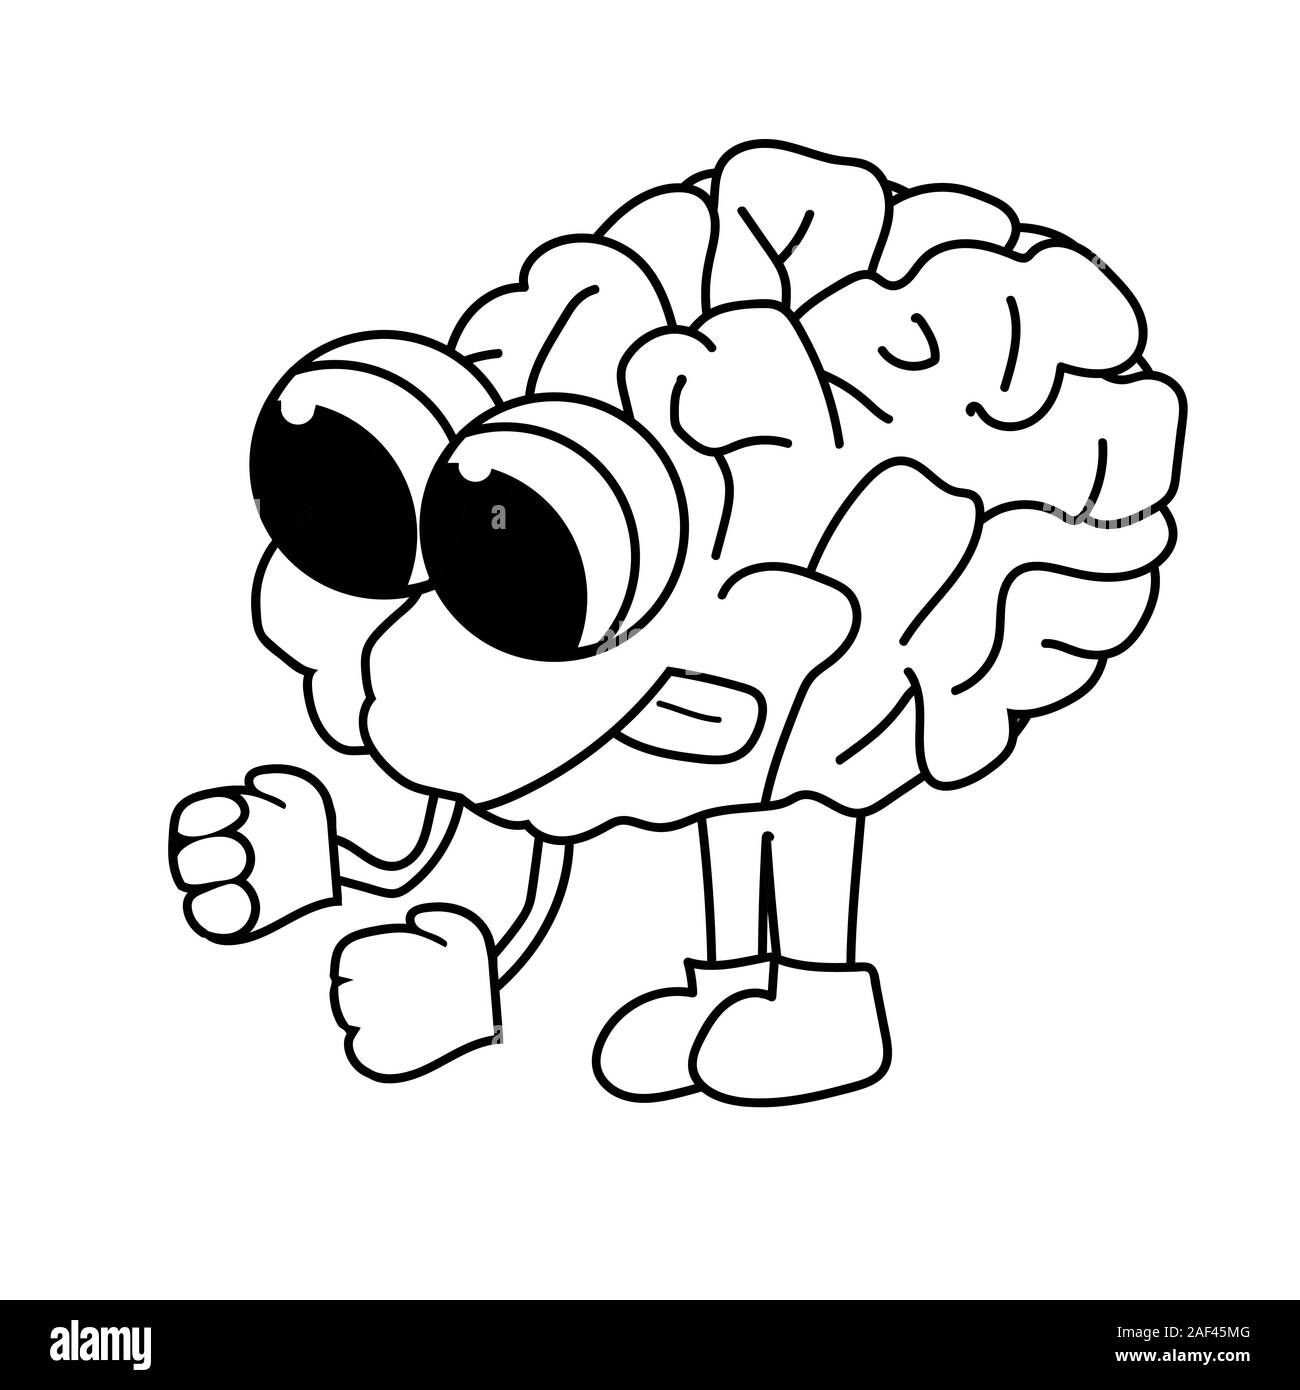 cute purposeful cartoon brain. Isolated outline stock vector illustration Stock Vector